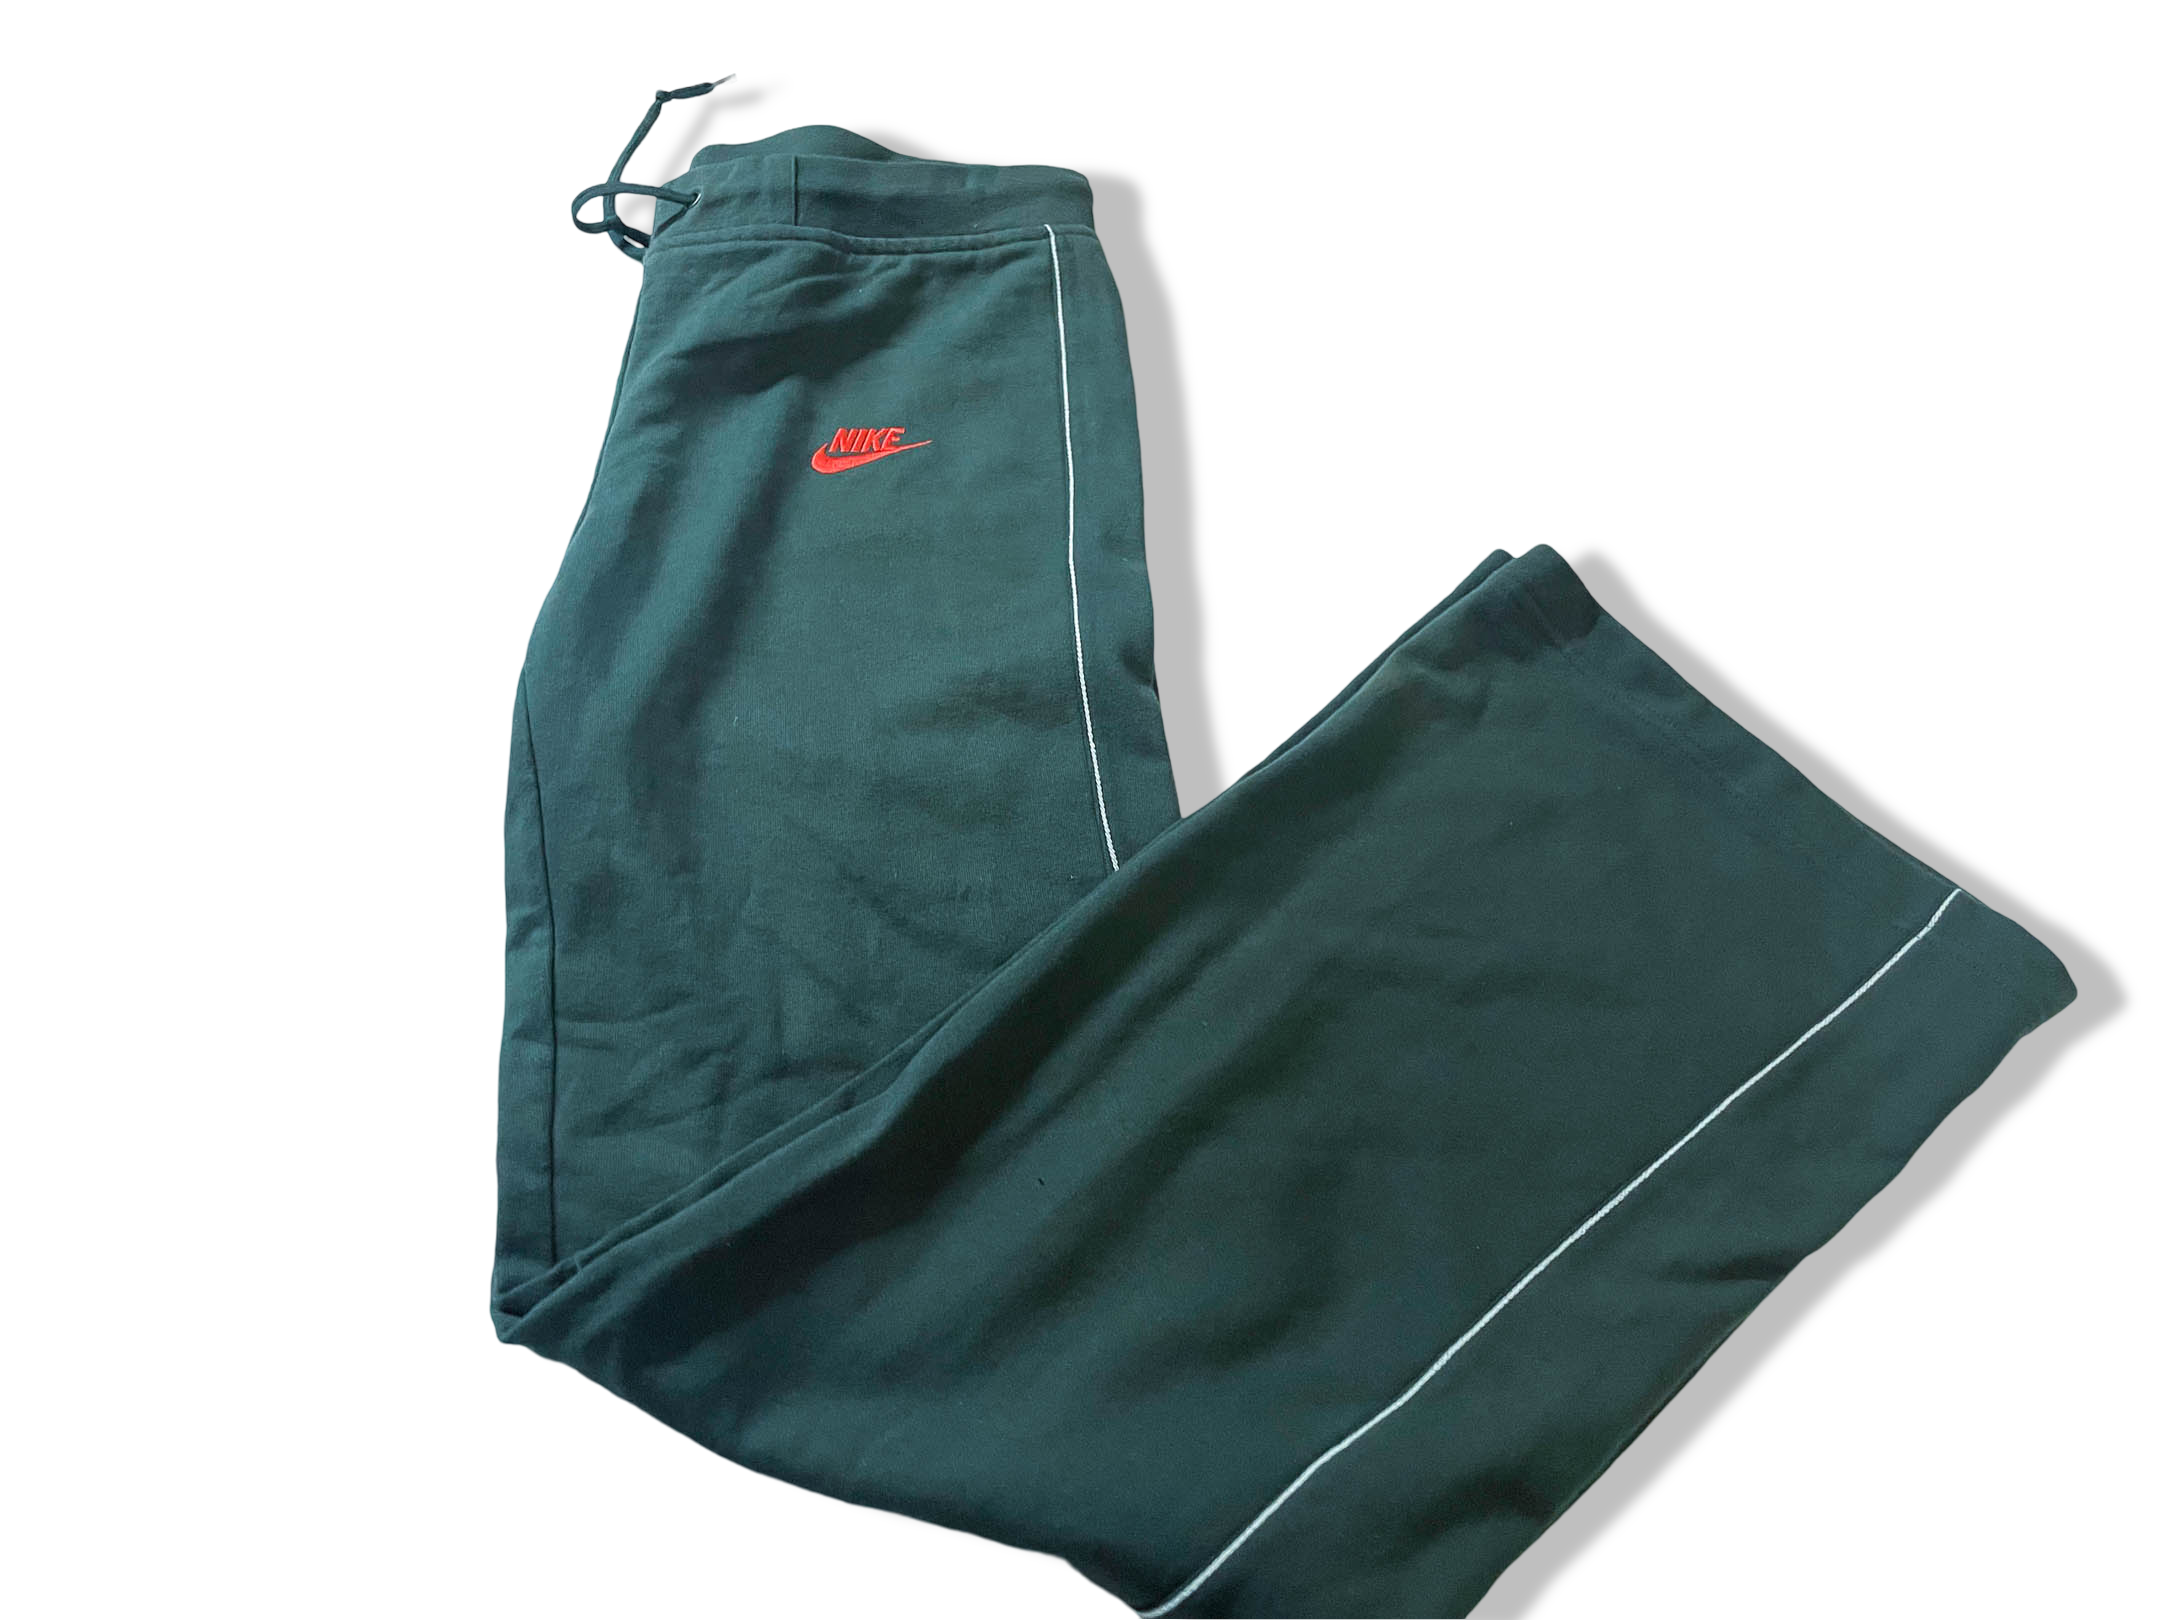 Vintage women's Nike green sweat pant in L/XL|L 31 W 30| SKU 3979